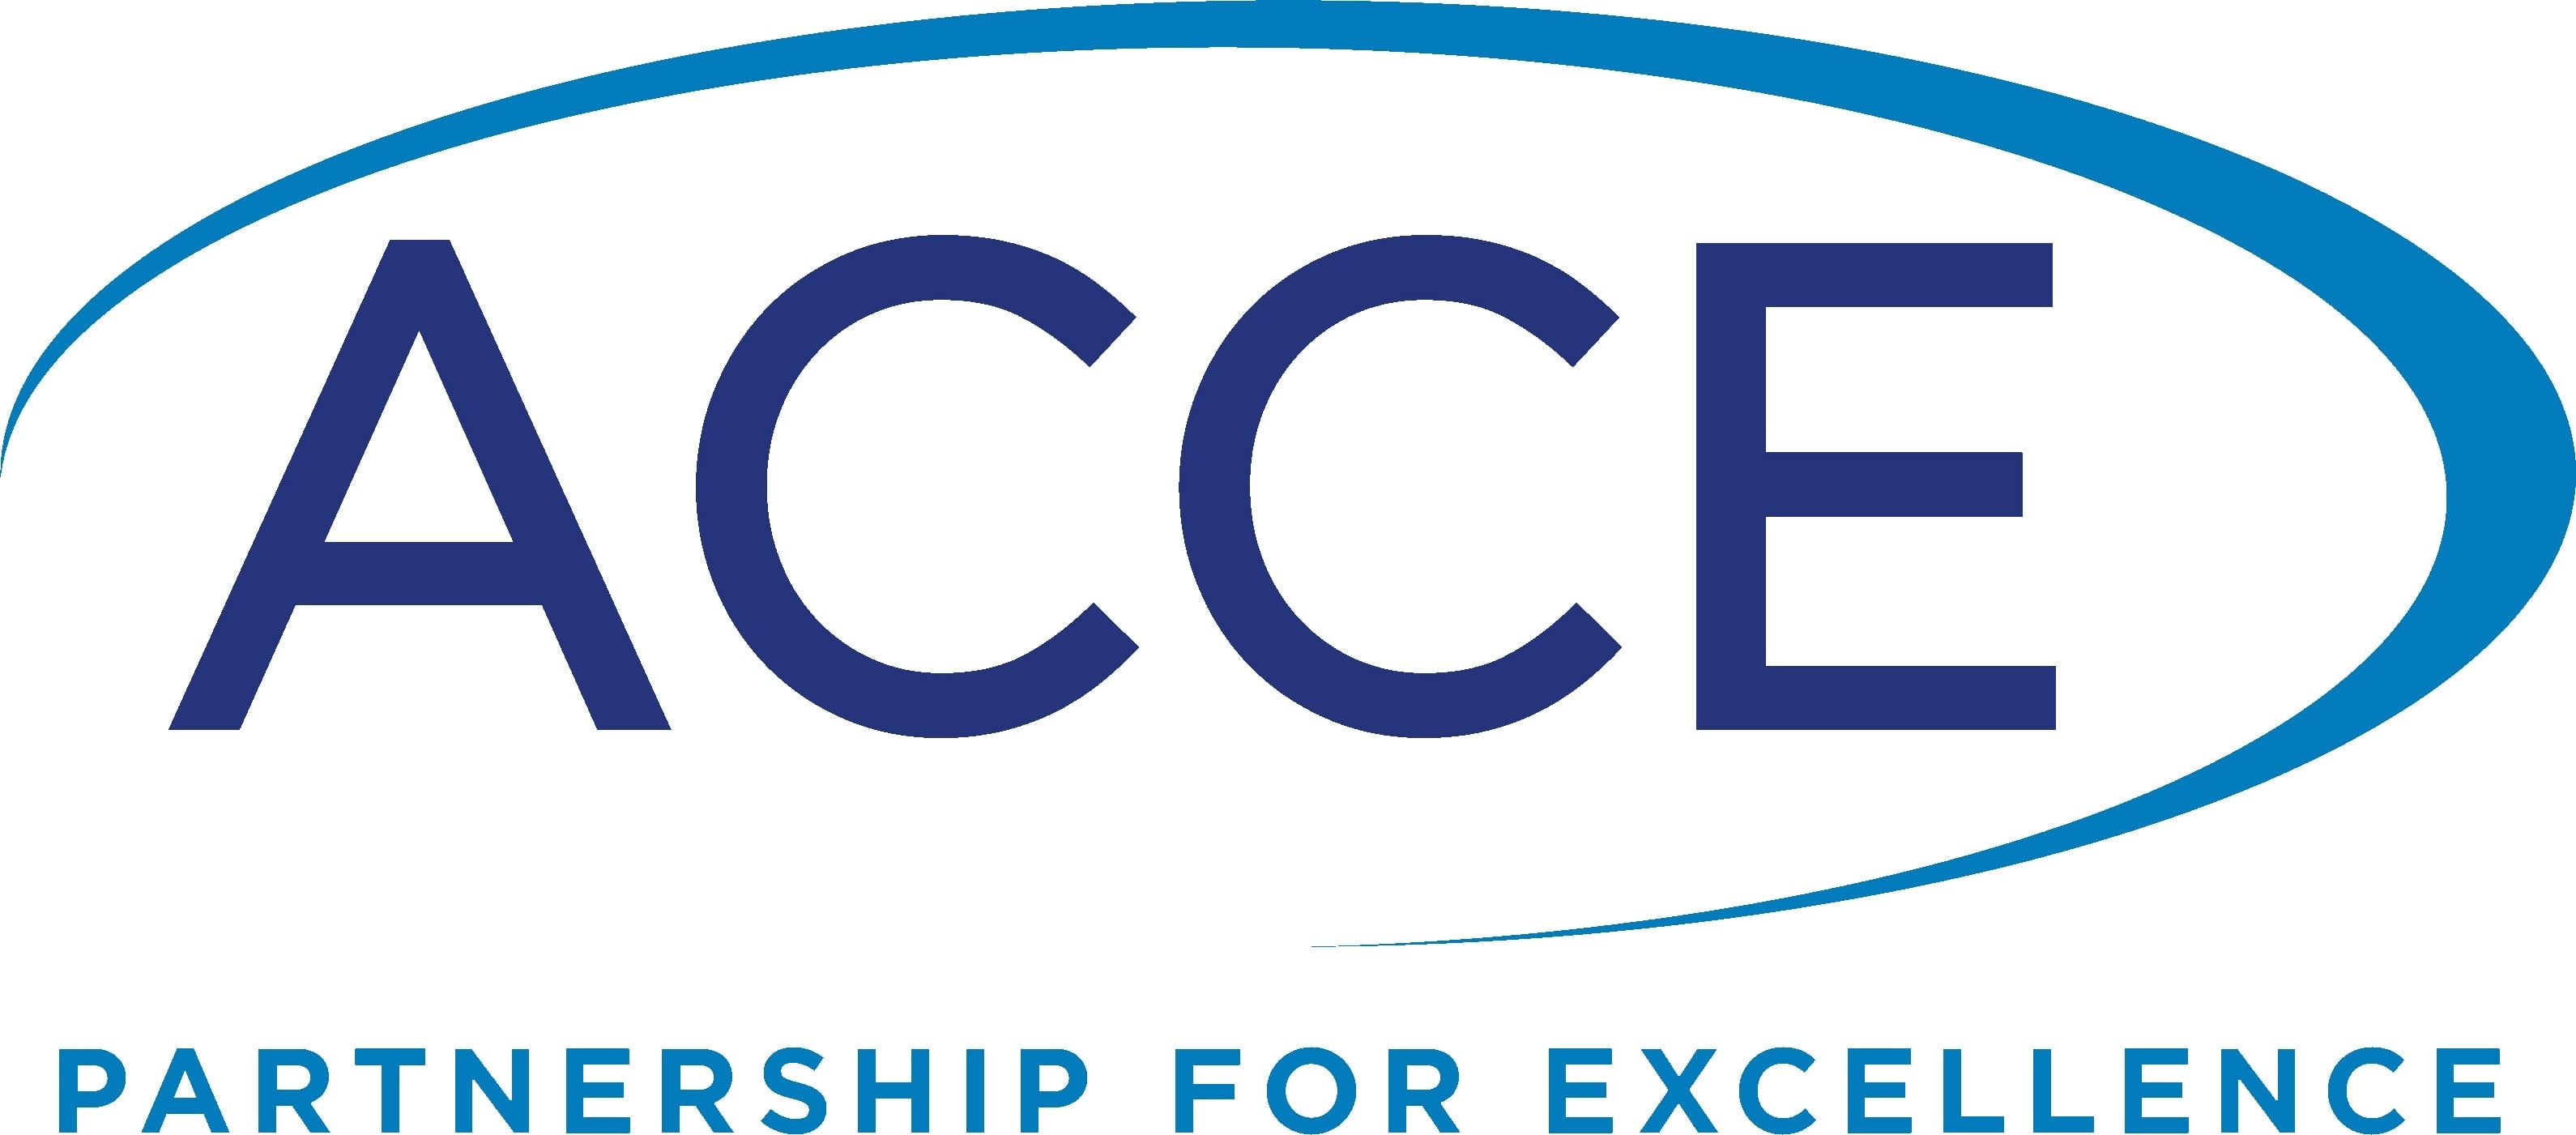 ACCE Logo